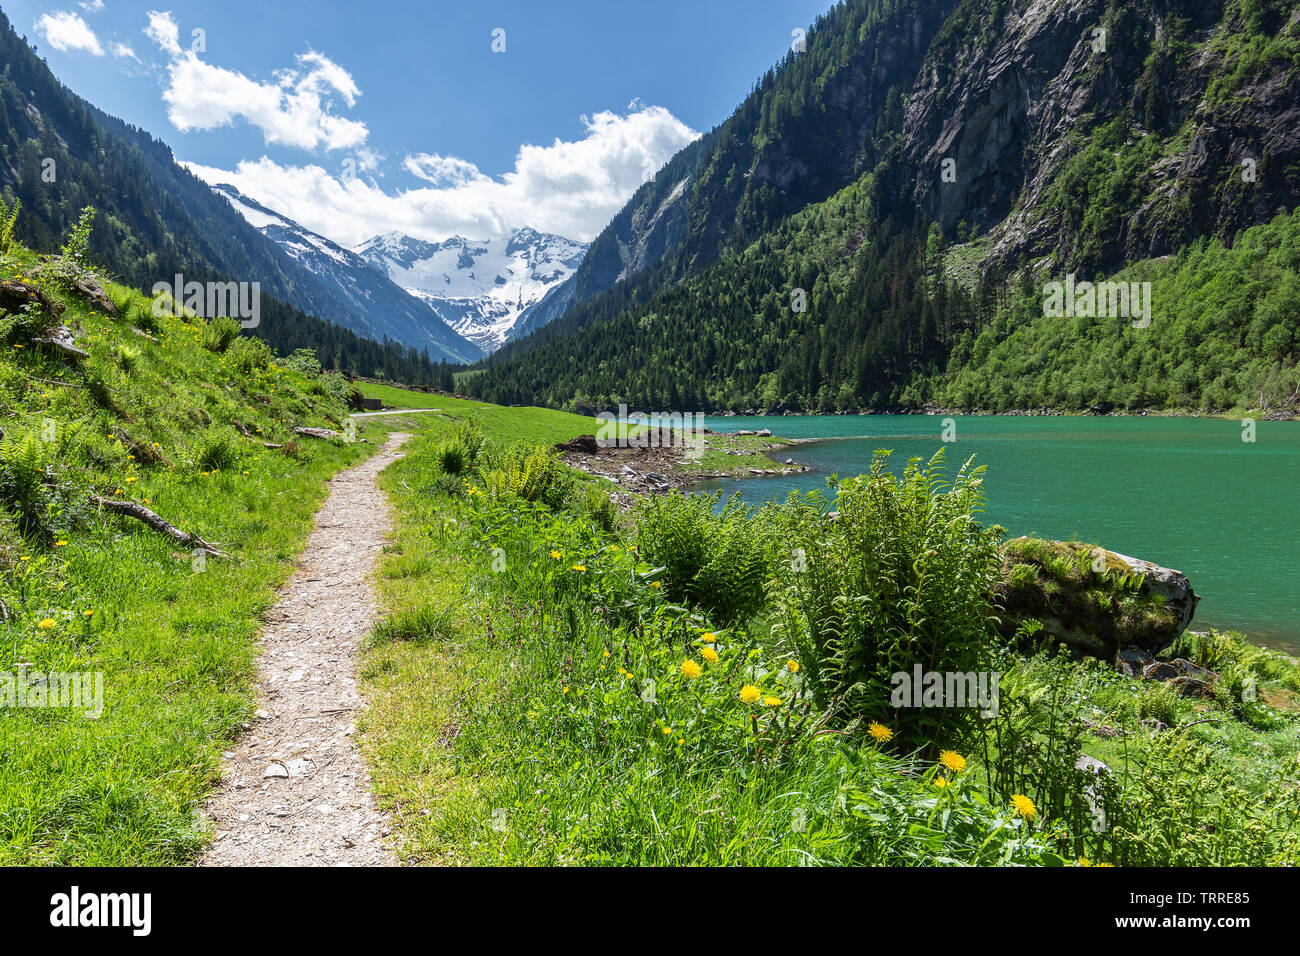 Idyllic excursion destination scenic in summertime in the Alps, near Stillup Lake, Zillertal Alps Nature Park, Austria, Tyrol Stock Photo